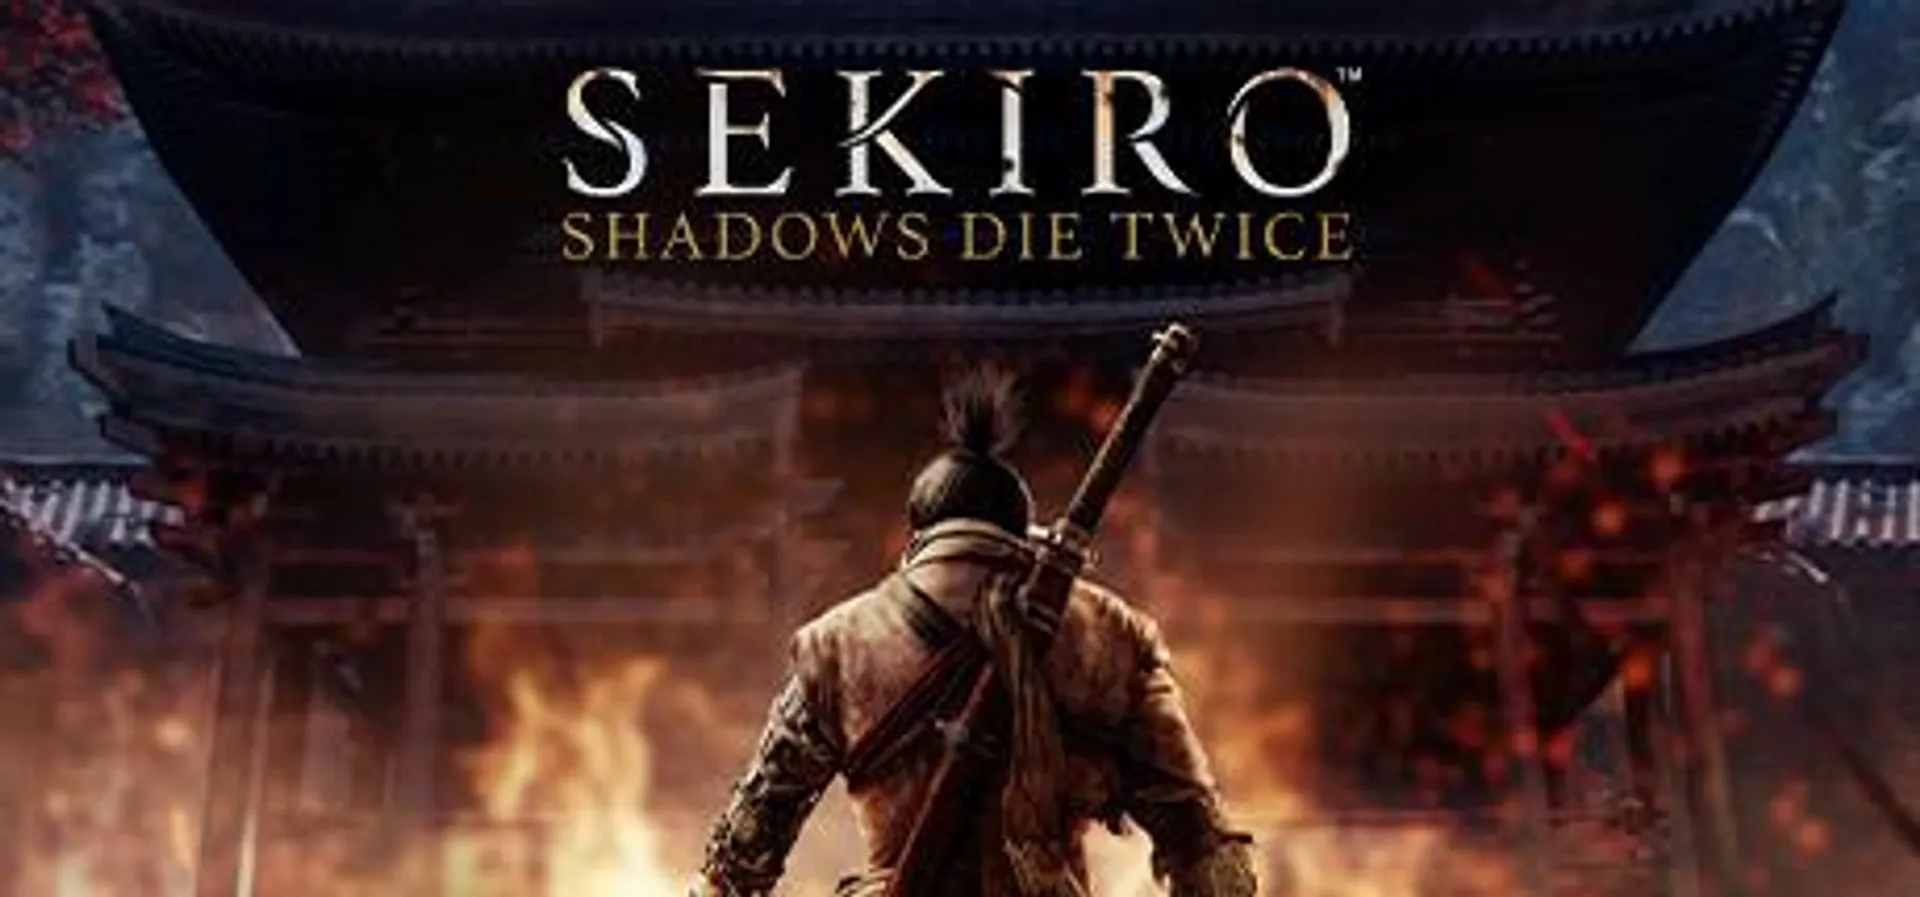 Save 50% on Sekiro™: Shadows Die Twice - GOTY Edition on Steam